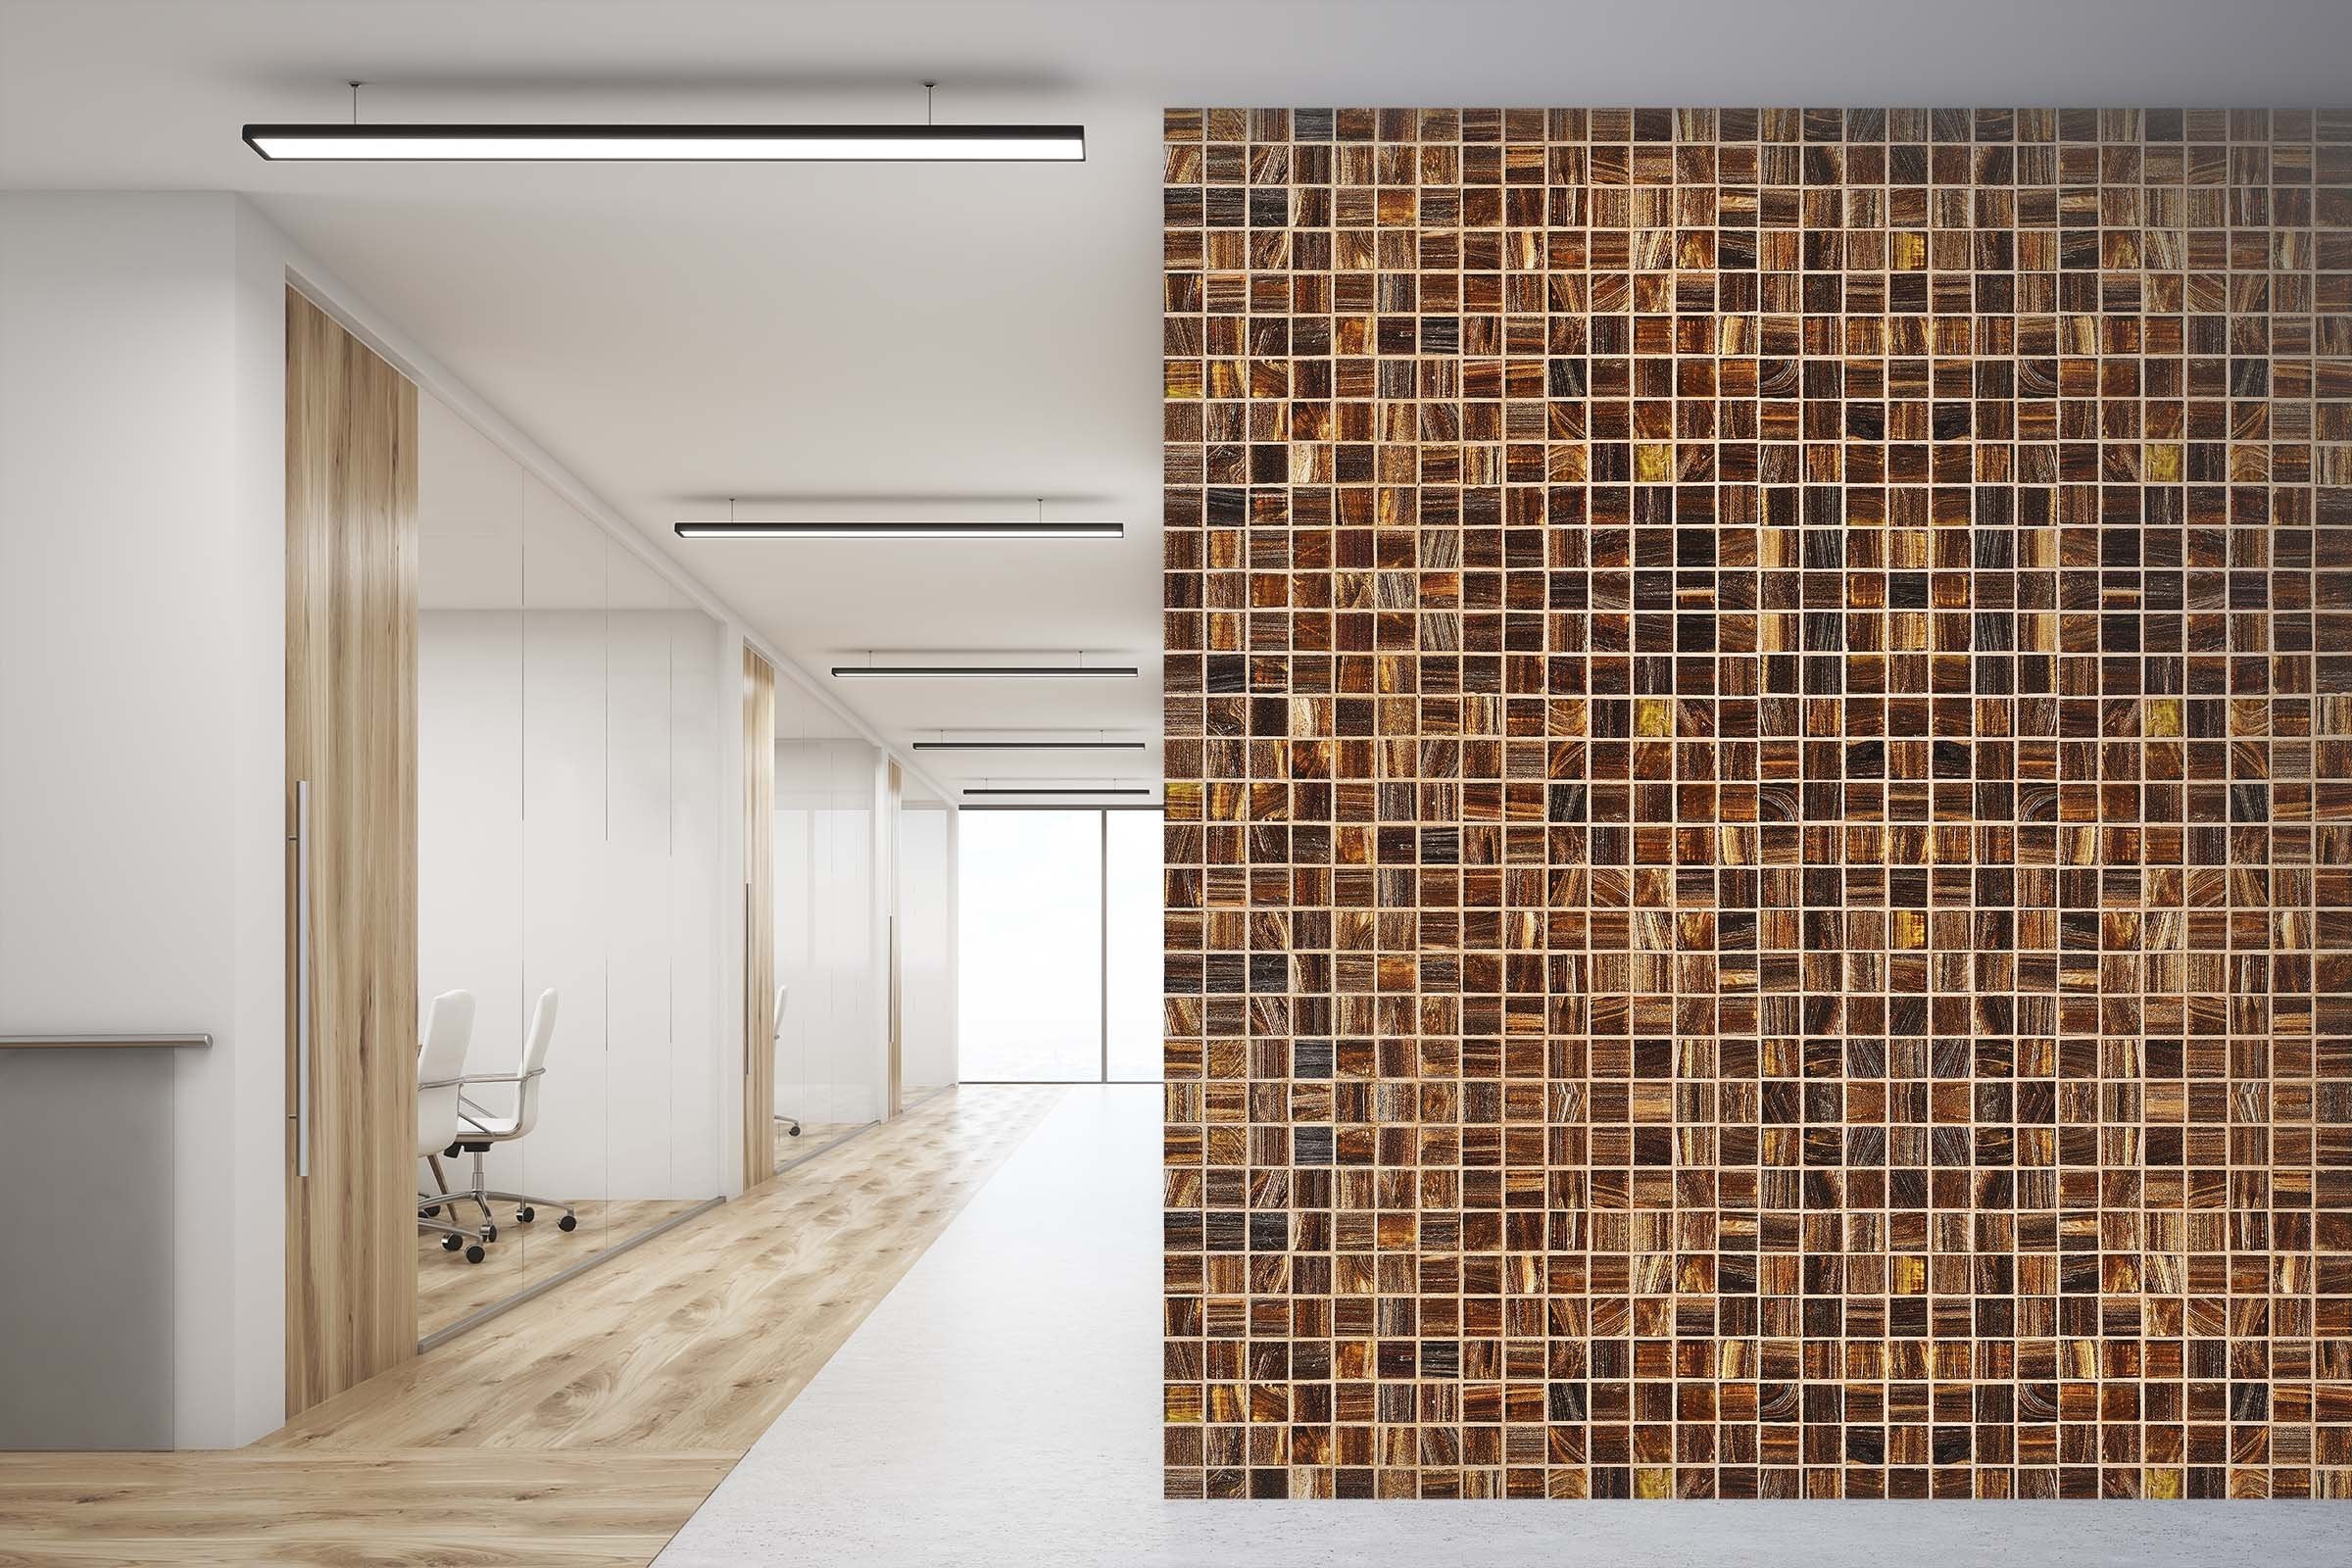 3D Wood Grain Mosaic 05 Marble Tile Texture Wallpaper AJ Wallpaper 2 